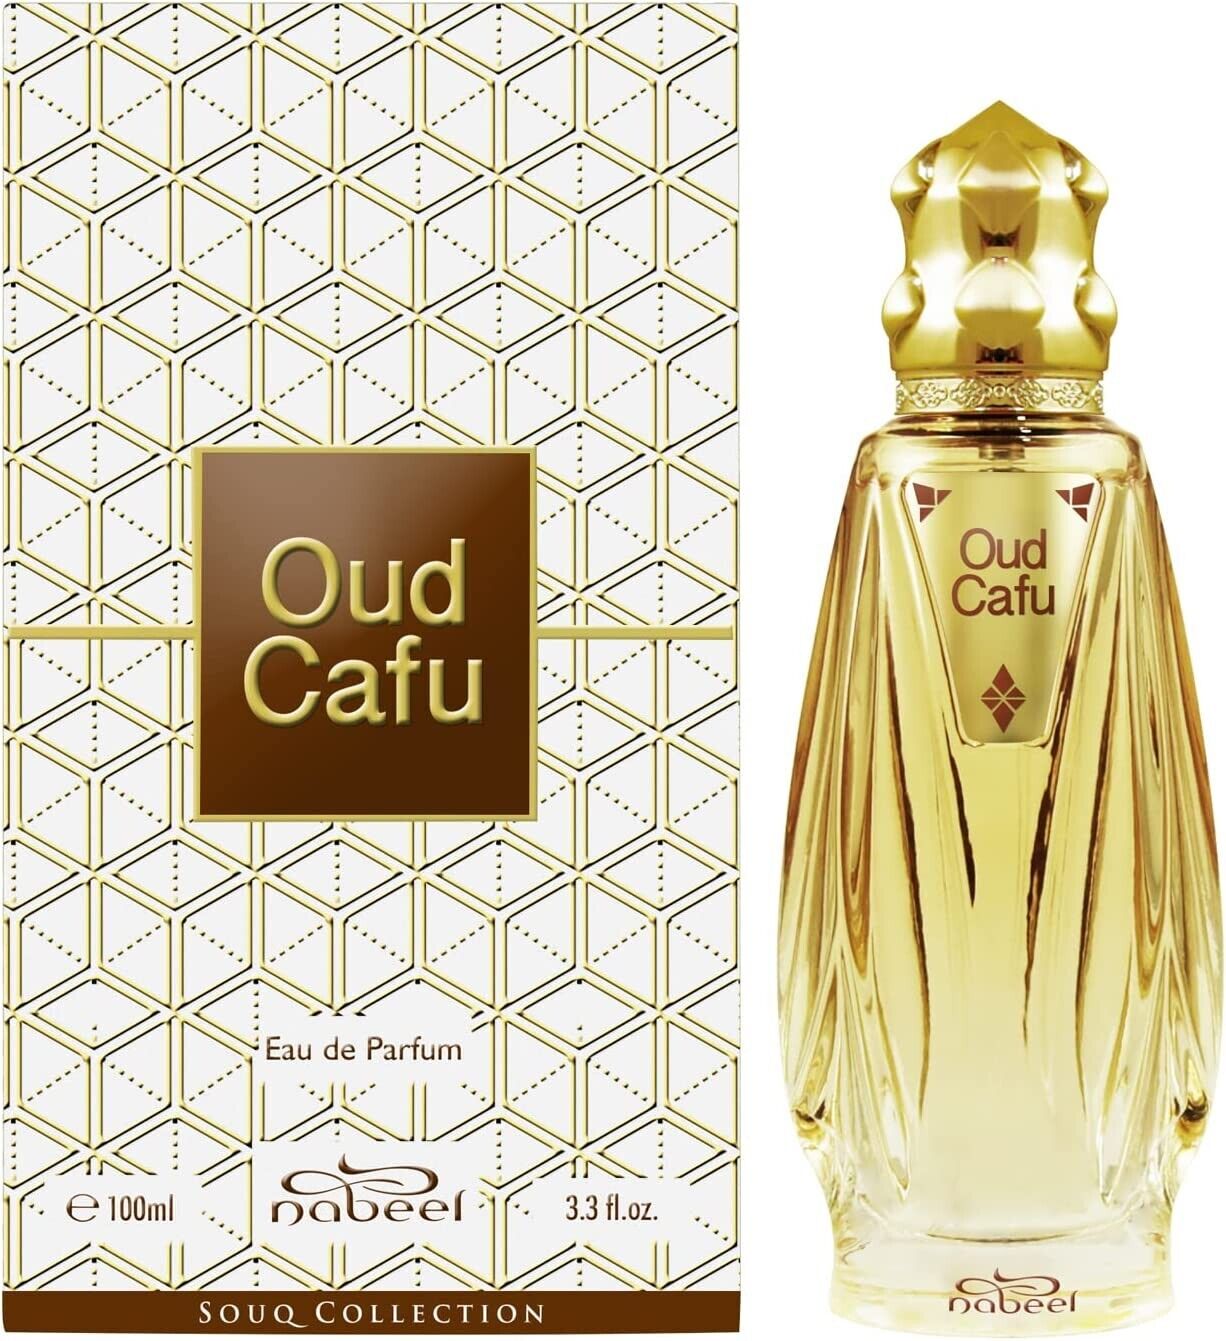 Oud Cafu EDP (100ml) perfume spray by Nabeel